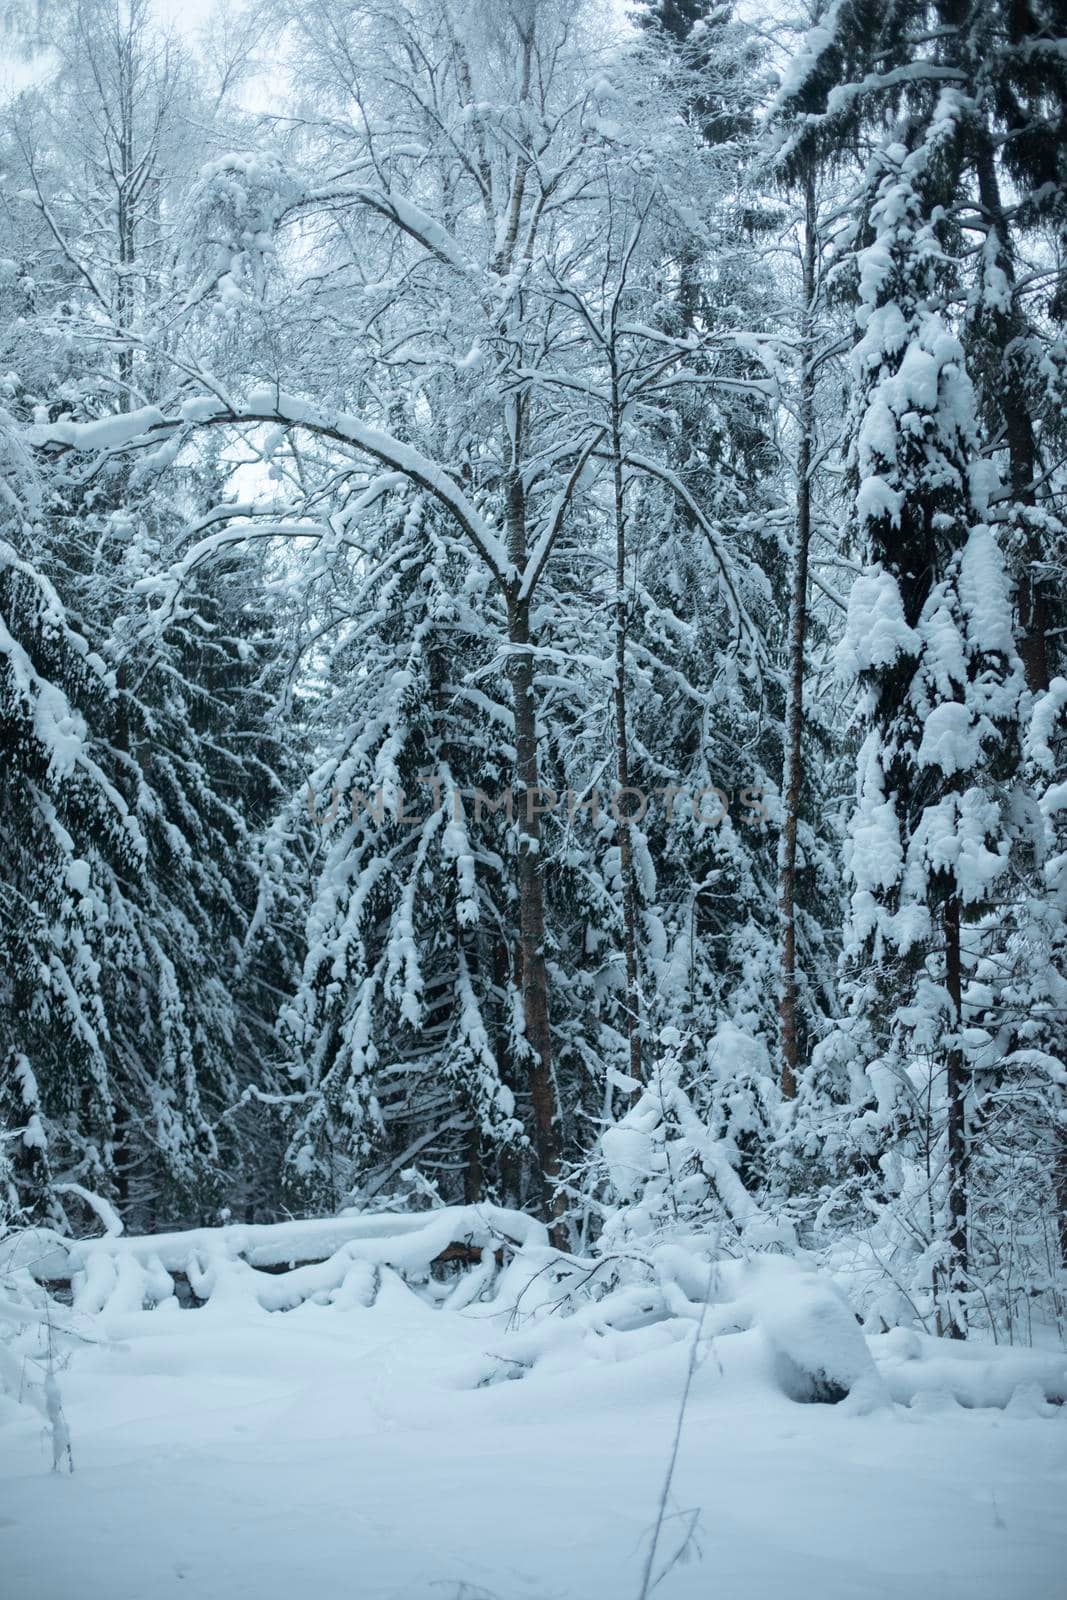 Winter forest. We ate in snow. Natural landscape in snowfall. by OlegKopyov